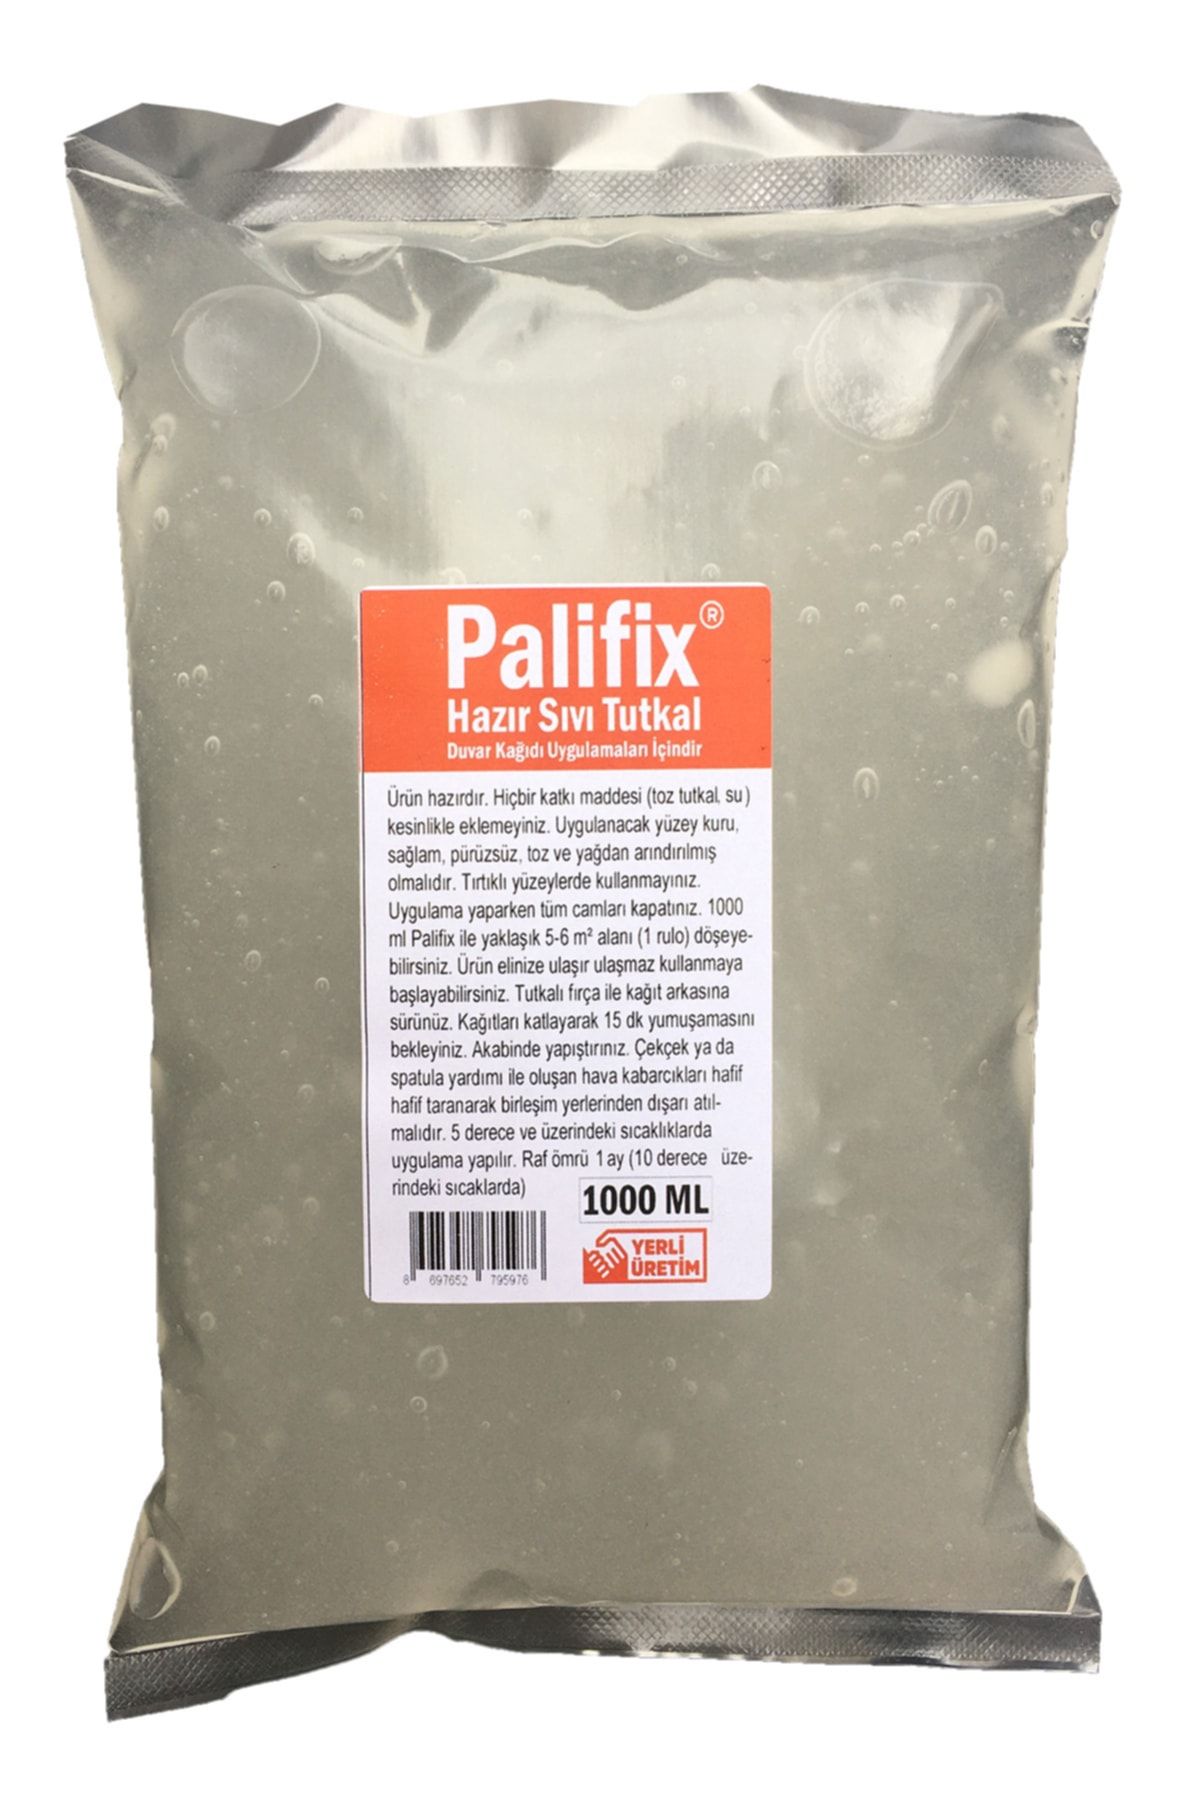 Palifix 1000ml Hazır Duvar Kağıdı Tutkalı Yapıştırıcısı Sıvı Tutkal Glitolin (1 Rulo 5m²-6m² )